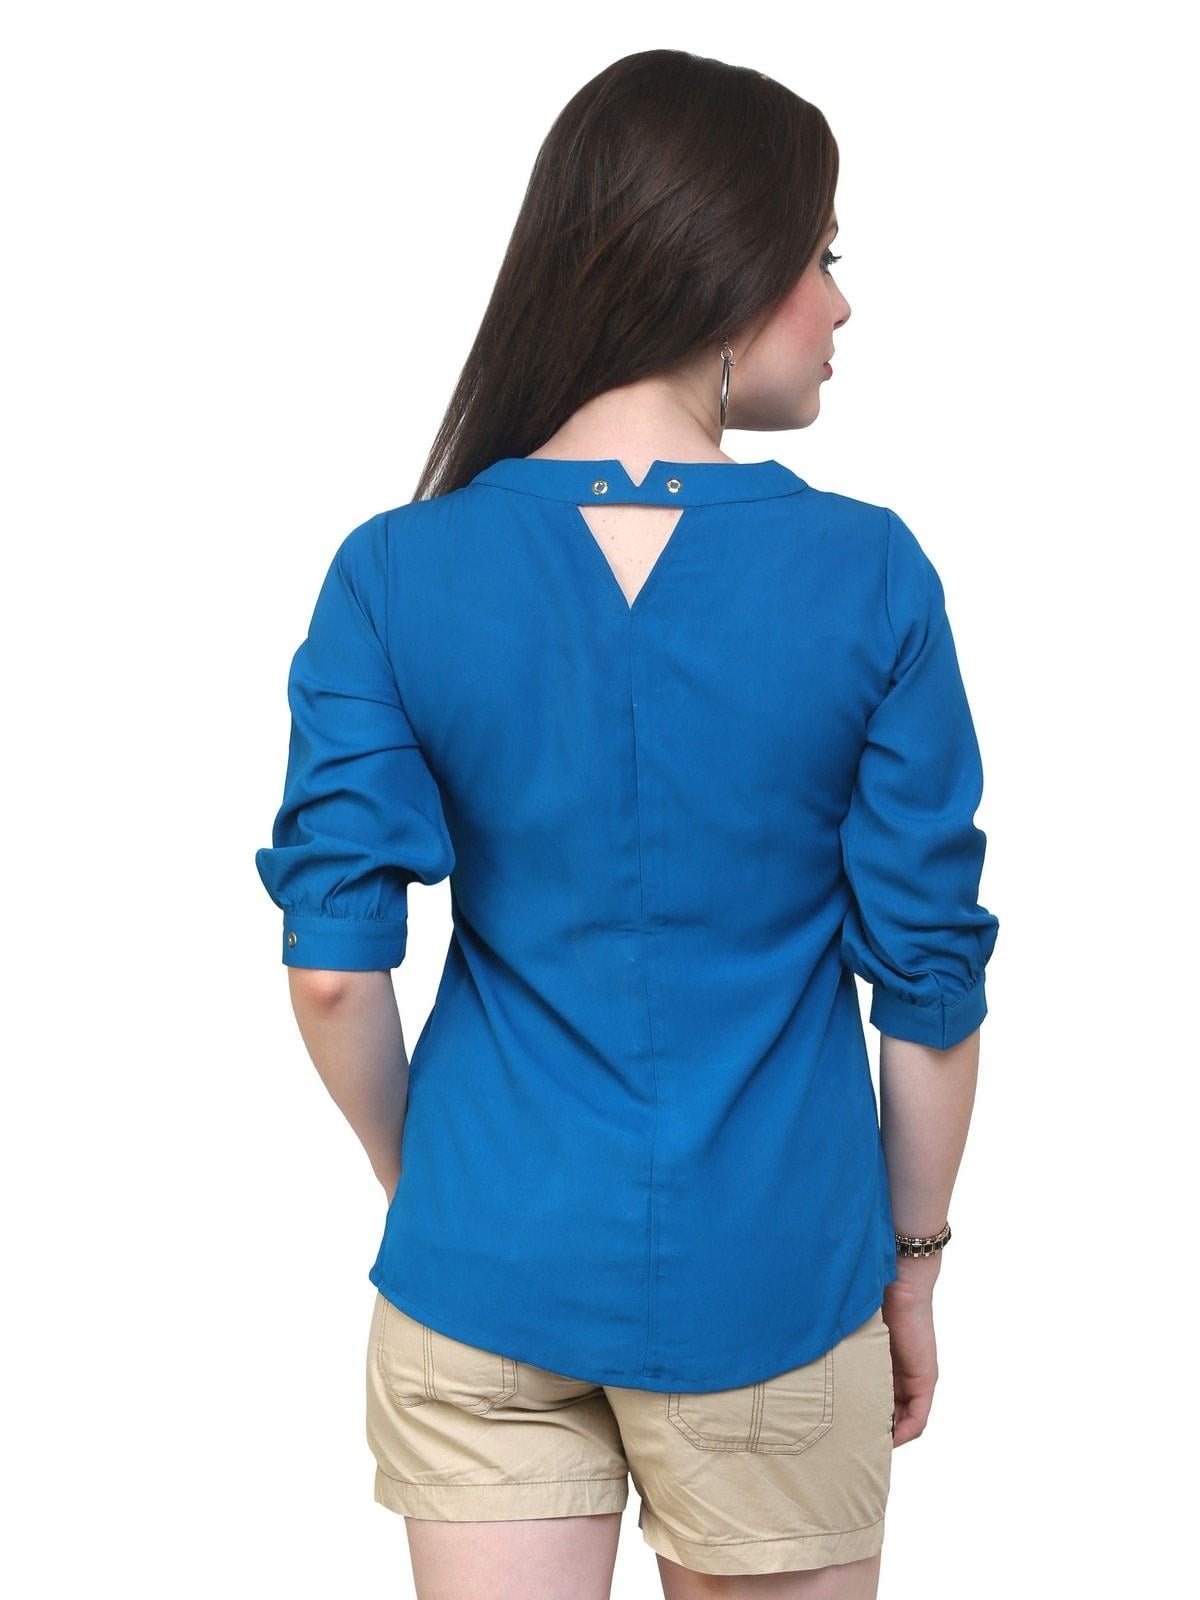 Women's Blue Shirt Top With Detailed Notch Designs - Pannkh